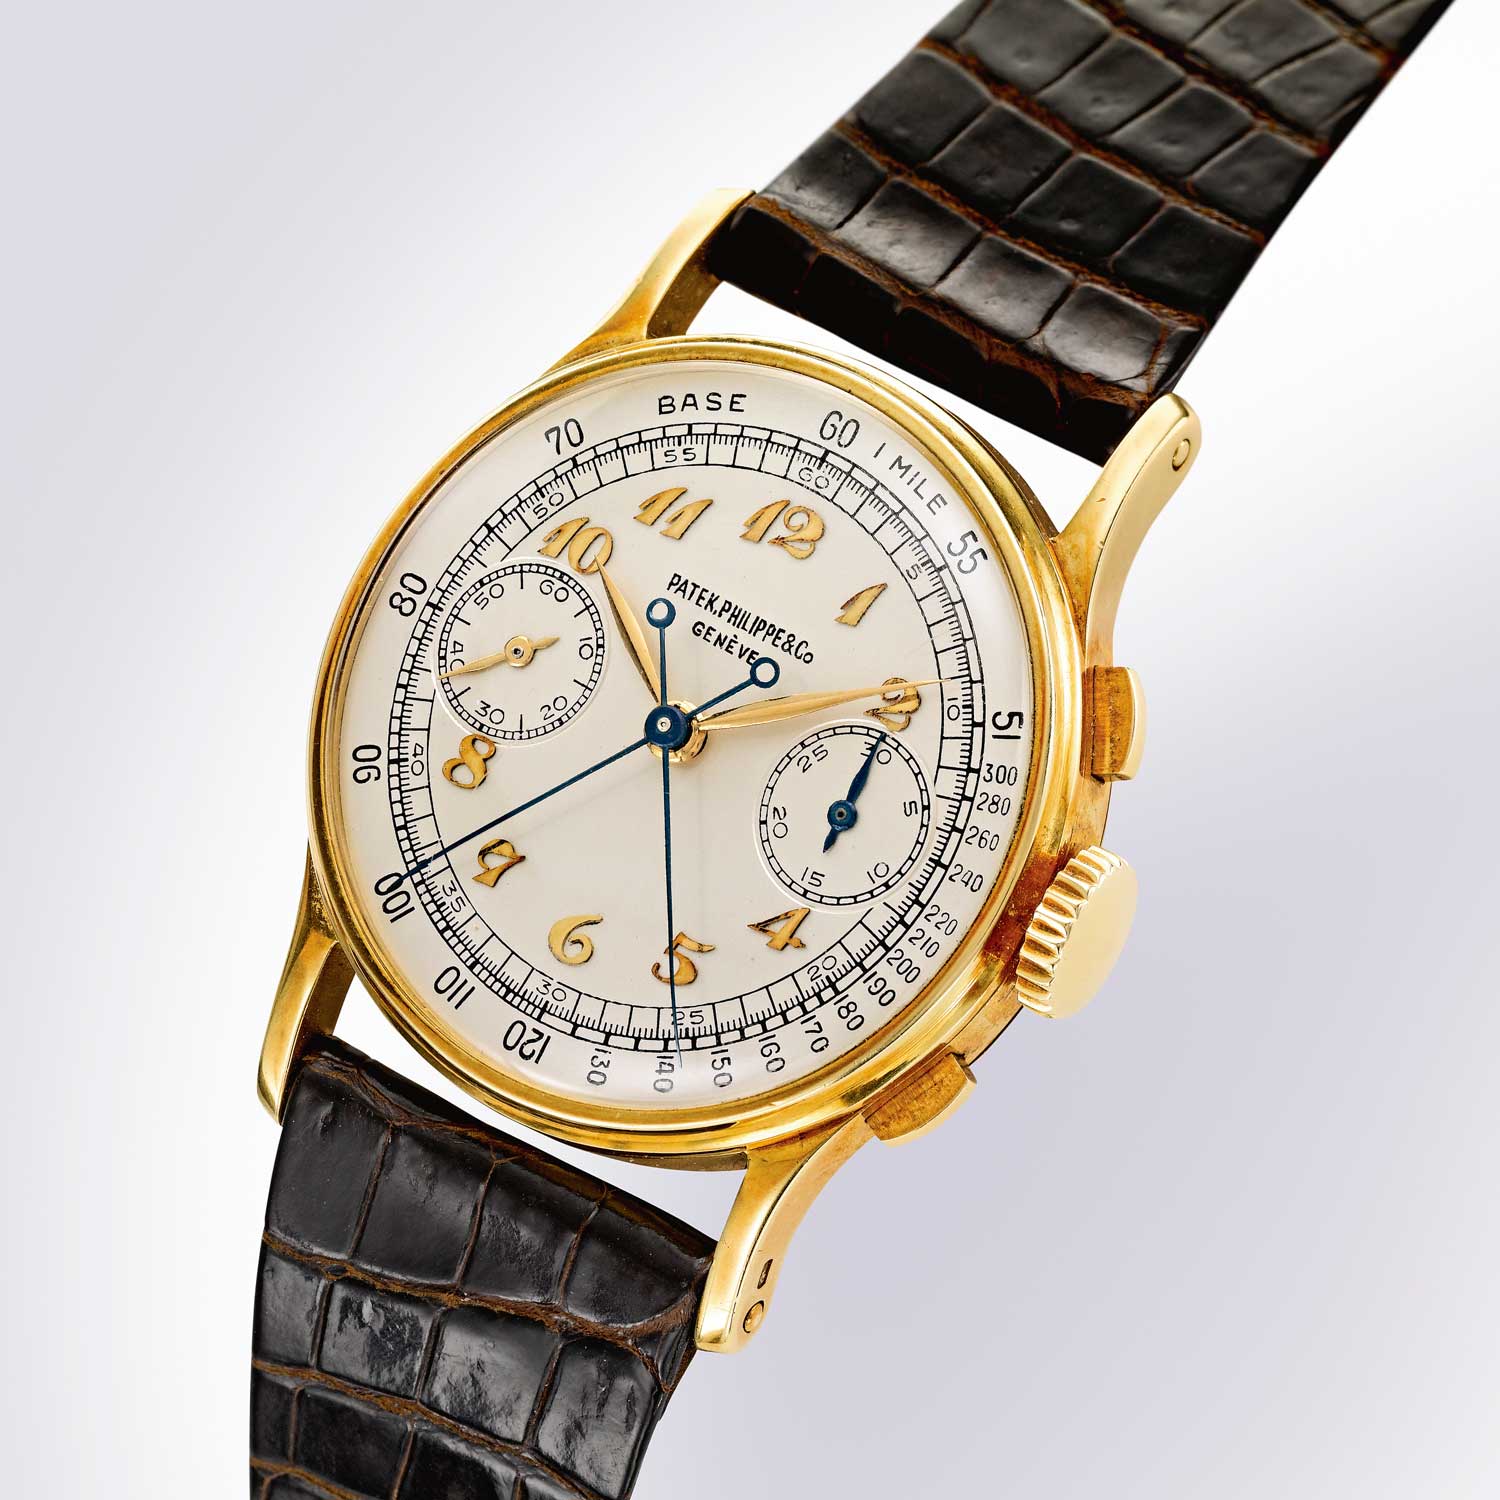 1946 Patek Philippe ref. 1436 yellow gold split second chronograph with Breguet numerals (Image: Sothebys.com)